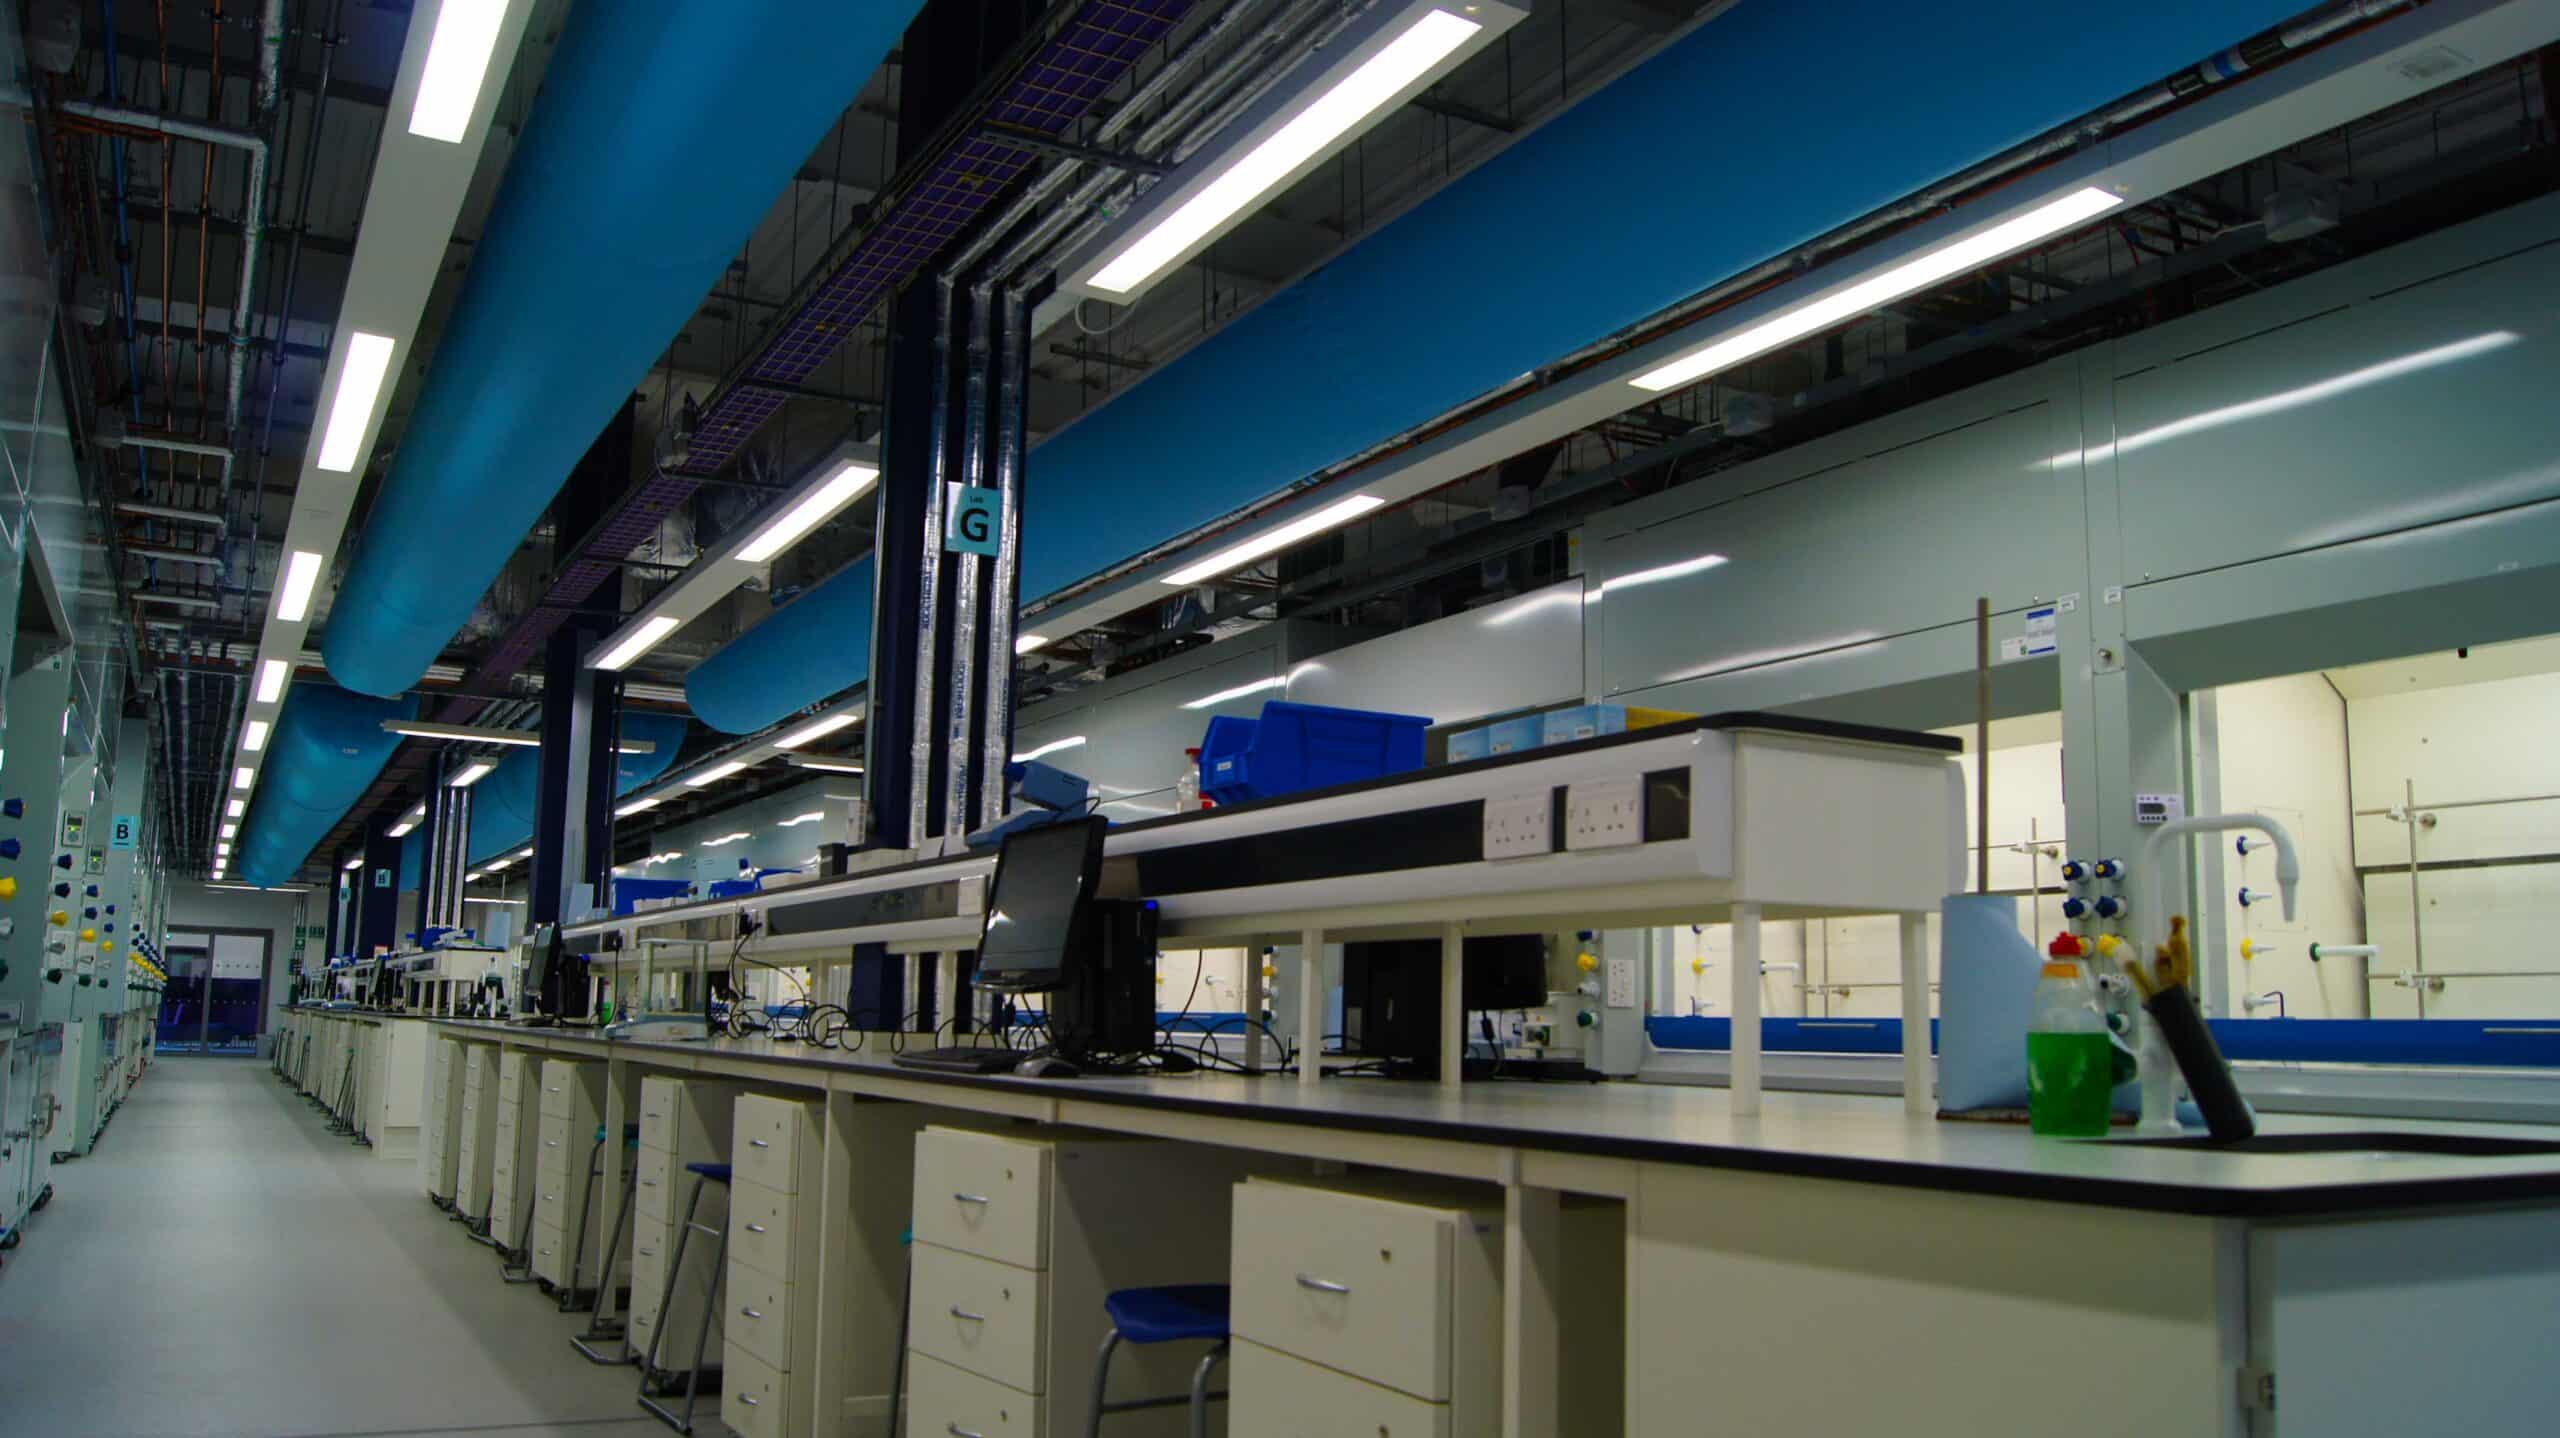 fabric ducting above laboratory equipment